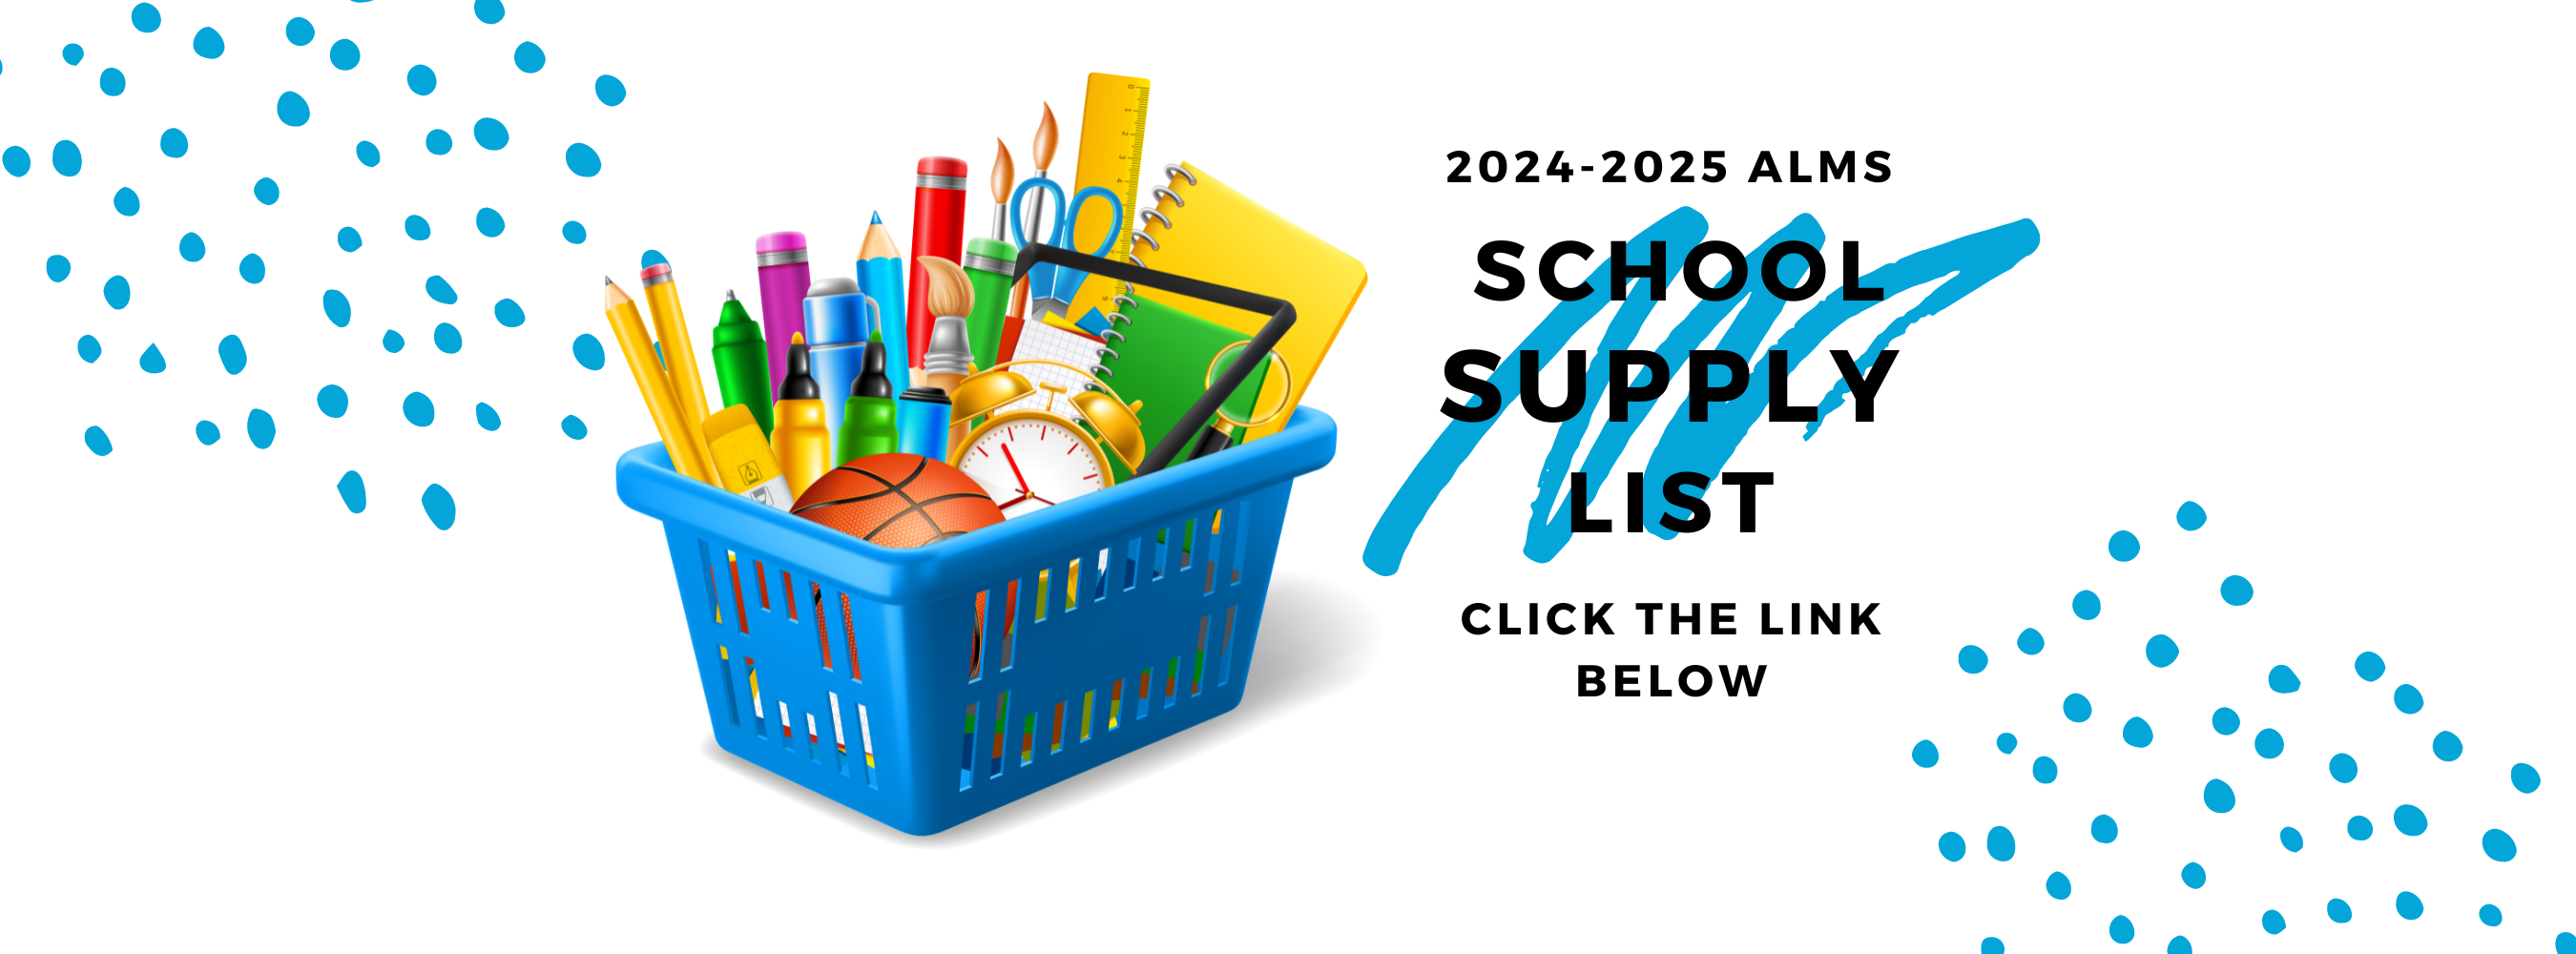 24-25 school supply lists